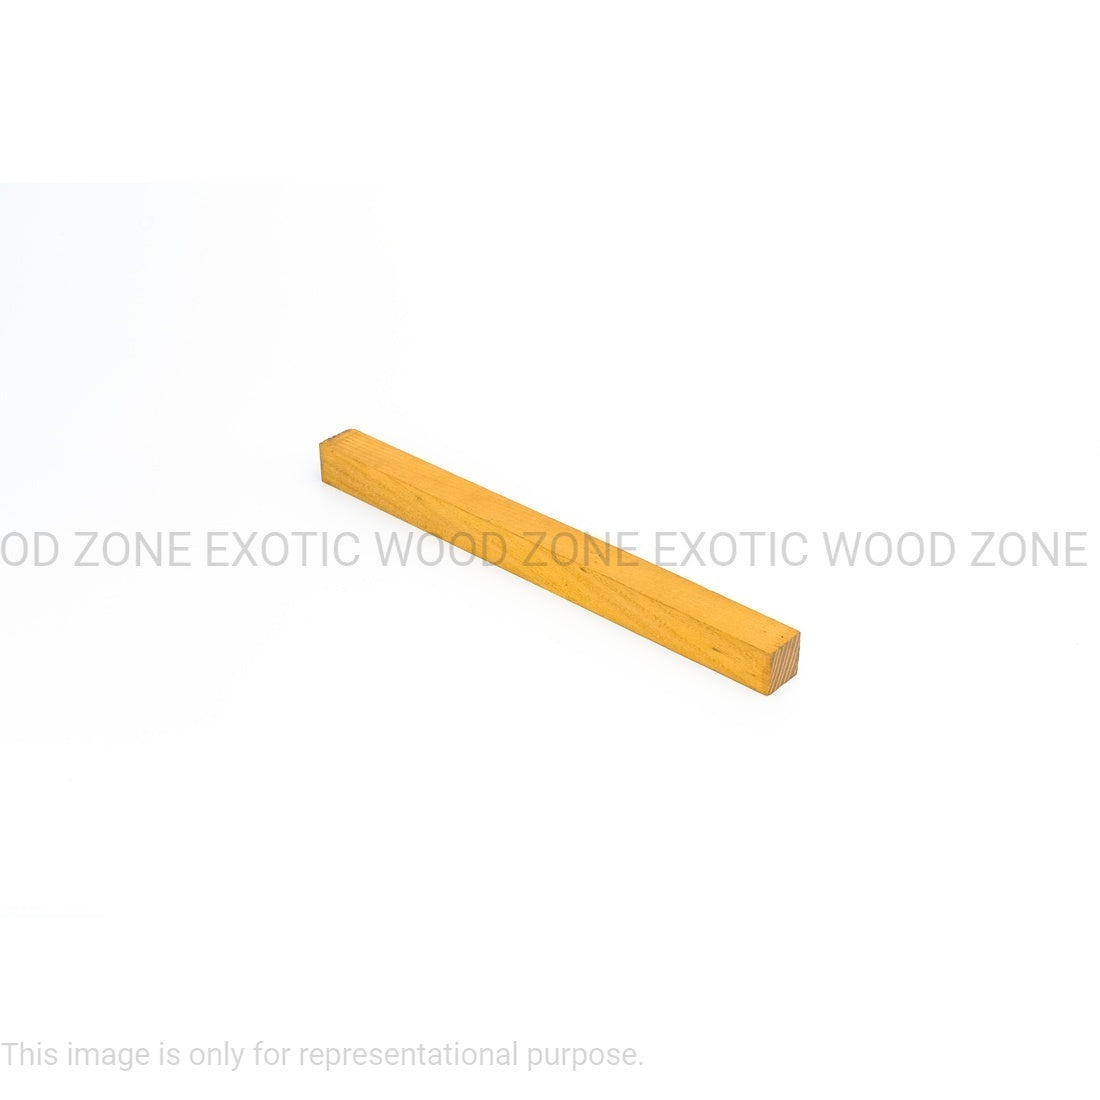 Osage Orange Hobbywood Blank 1&quot; x 1 &quot; x 12&quot; inches Exotic Wood Zone